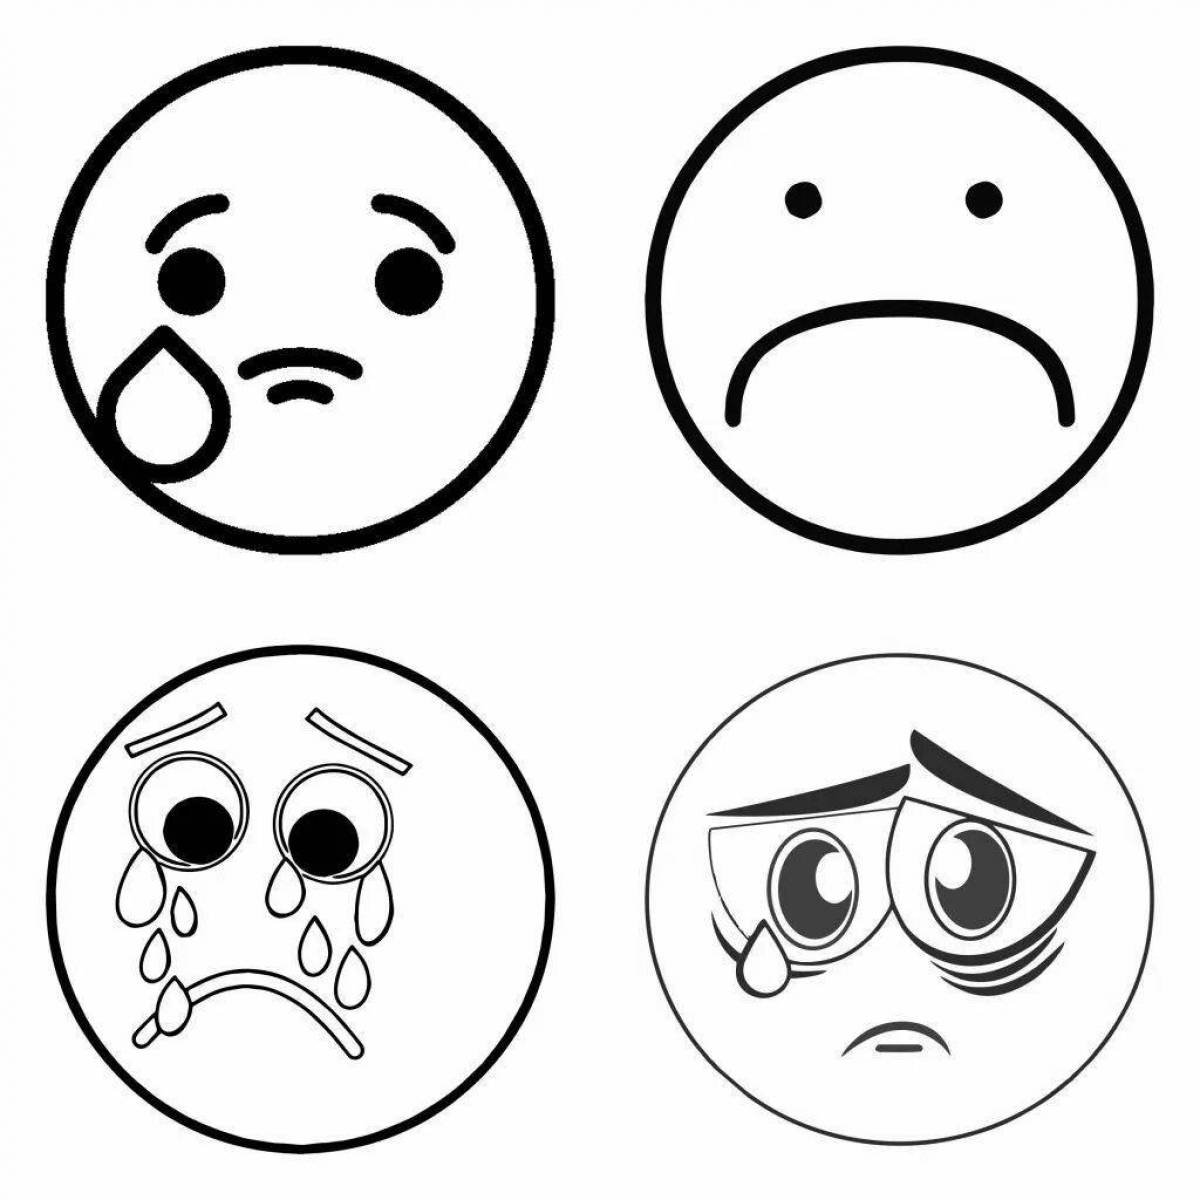 Nervous emoji coloring page